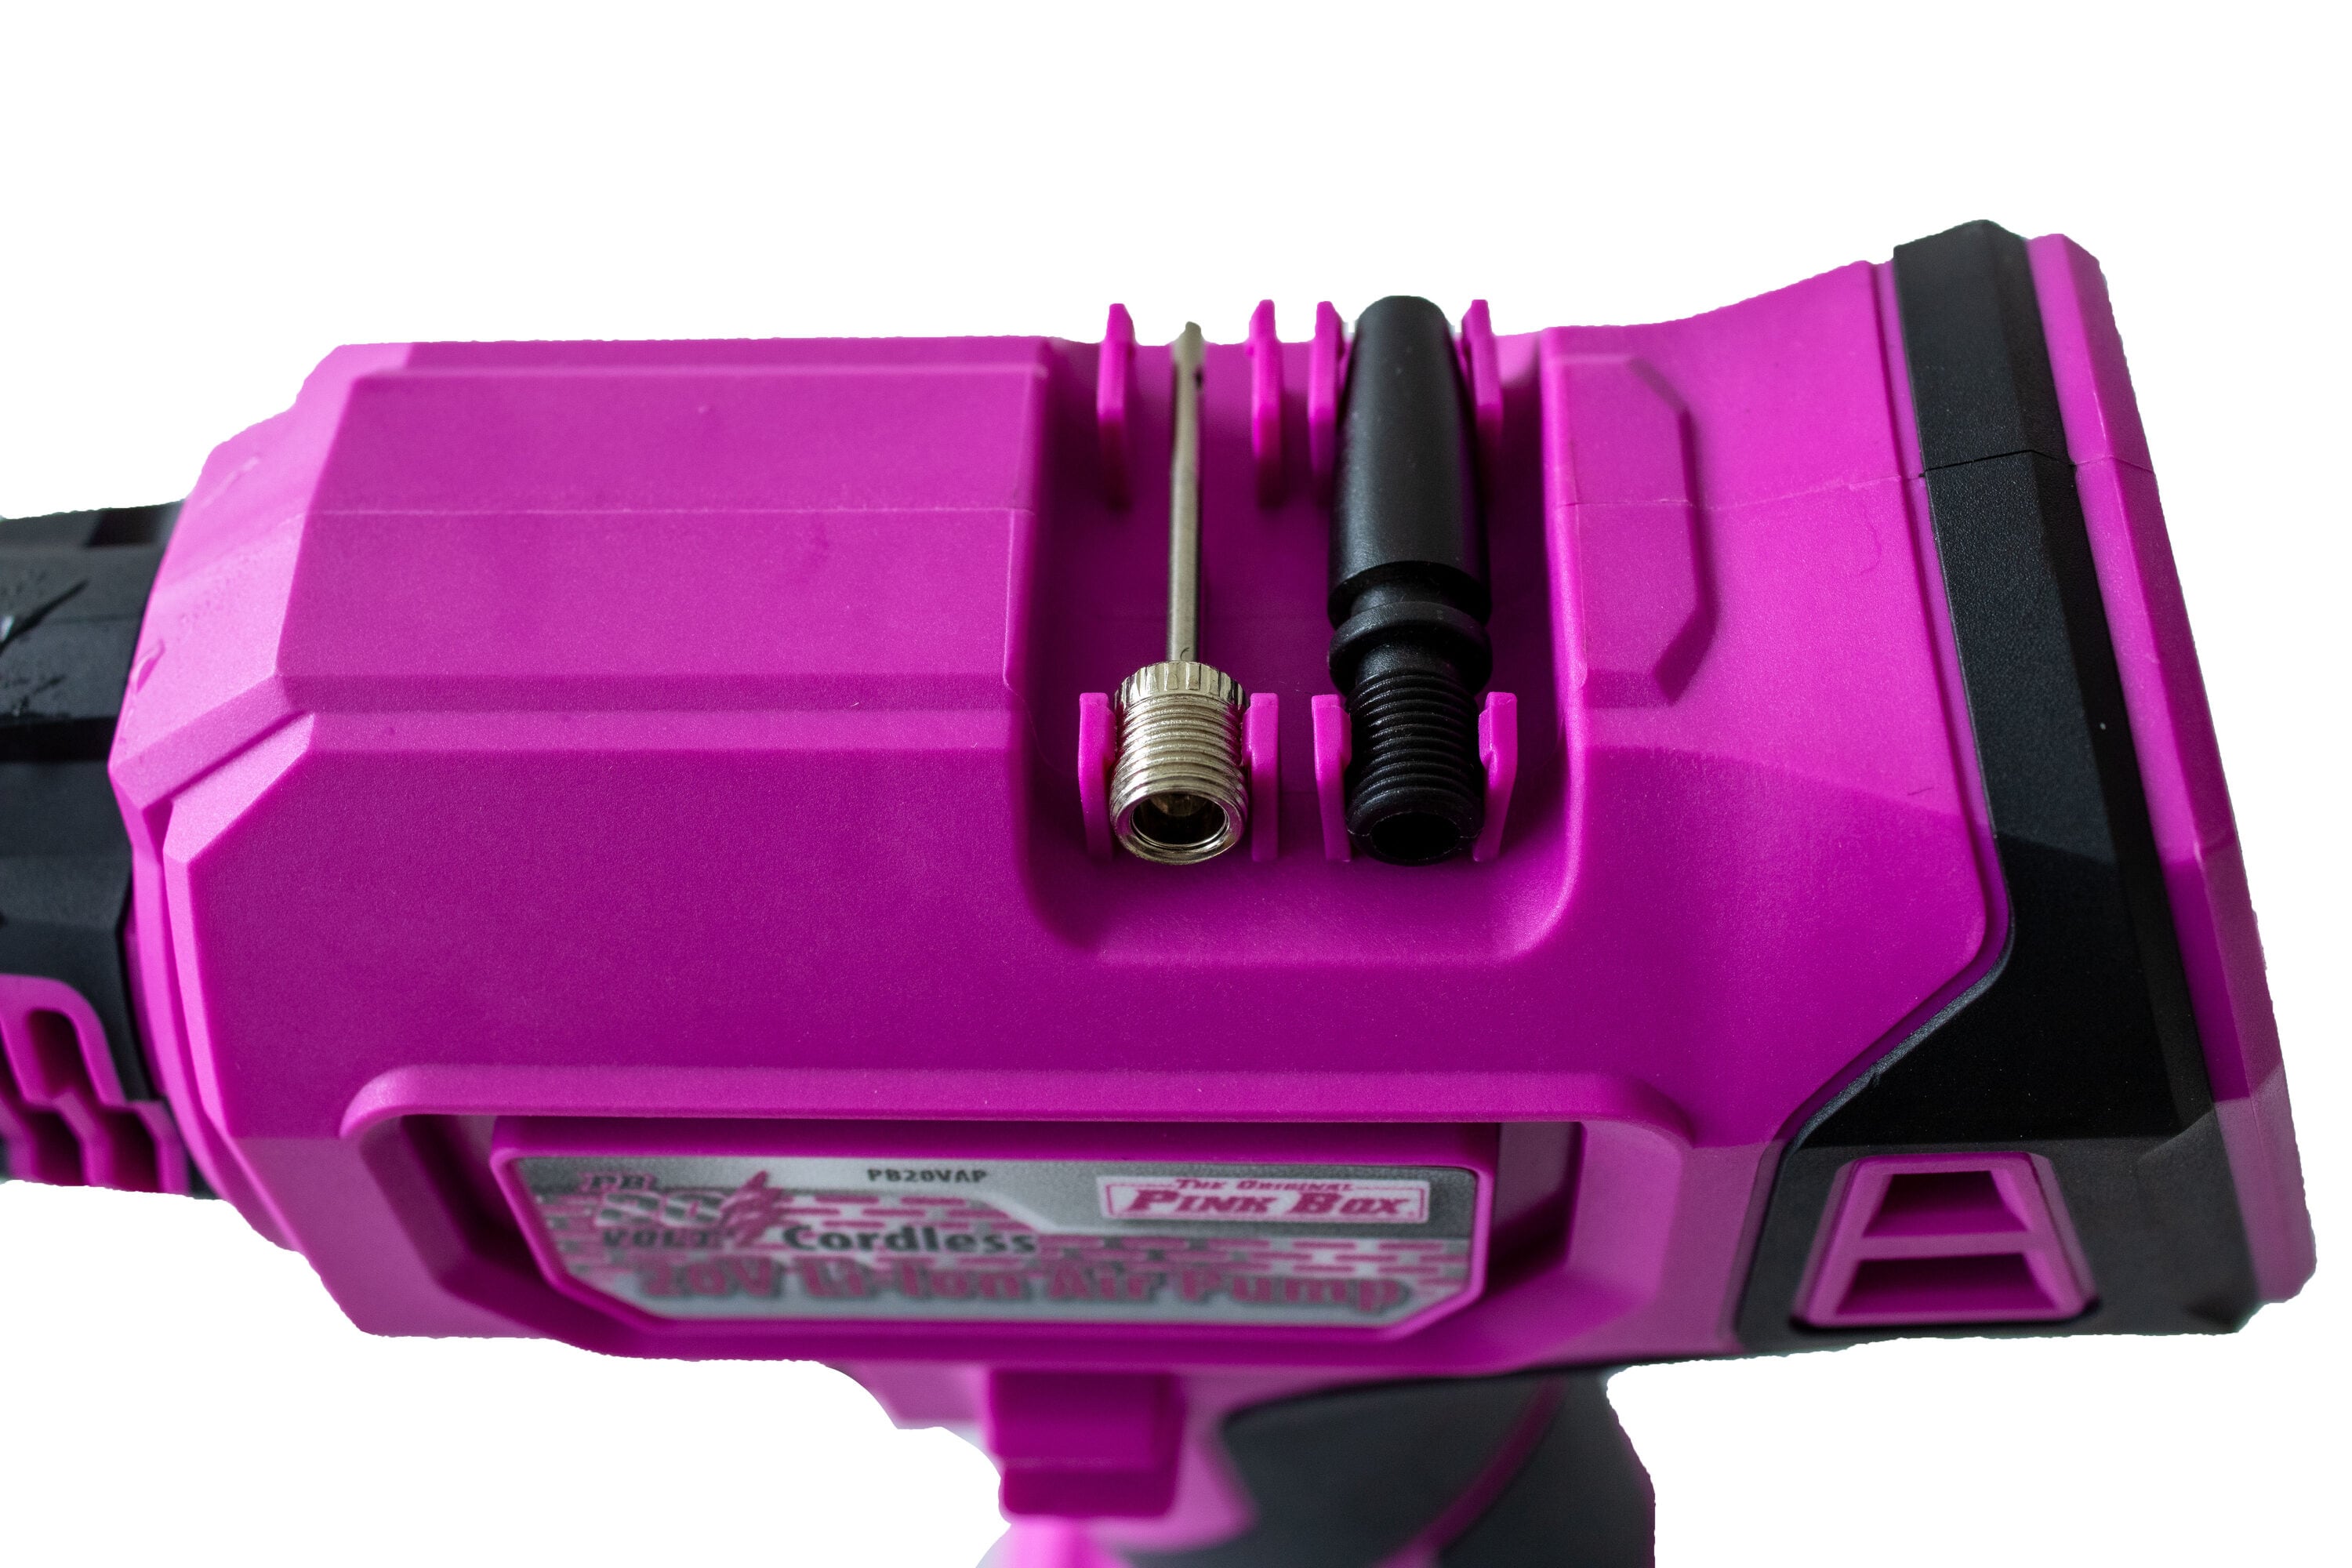 The Original Pink Box Pink Pro System 20-volt / Lithium Ion (li 